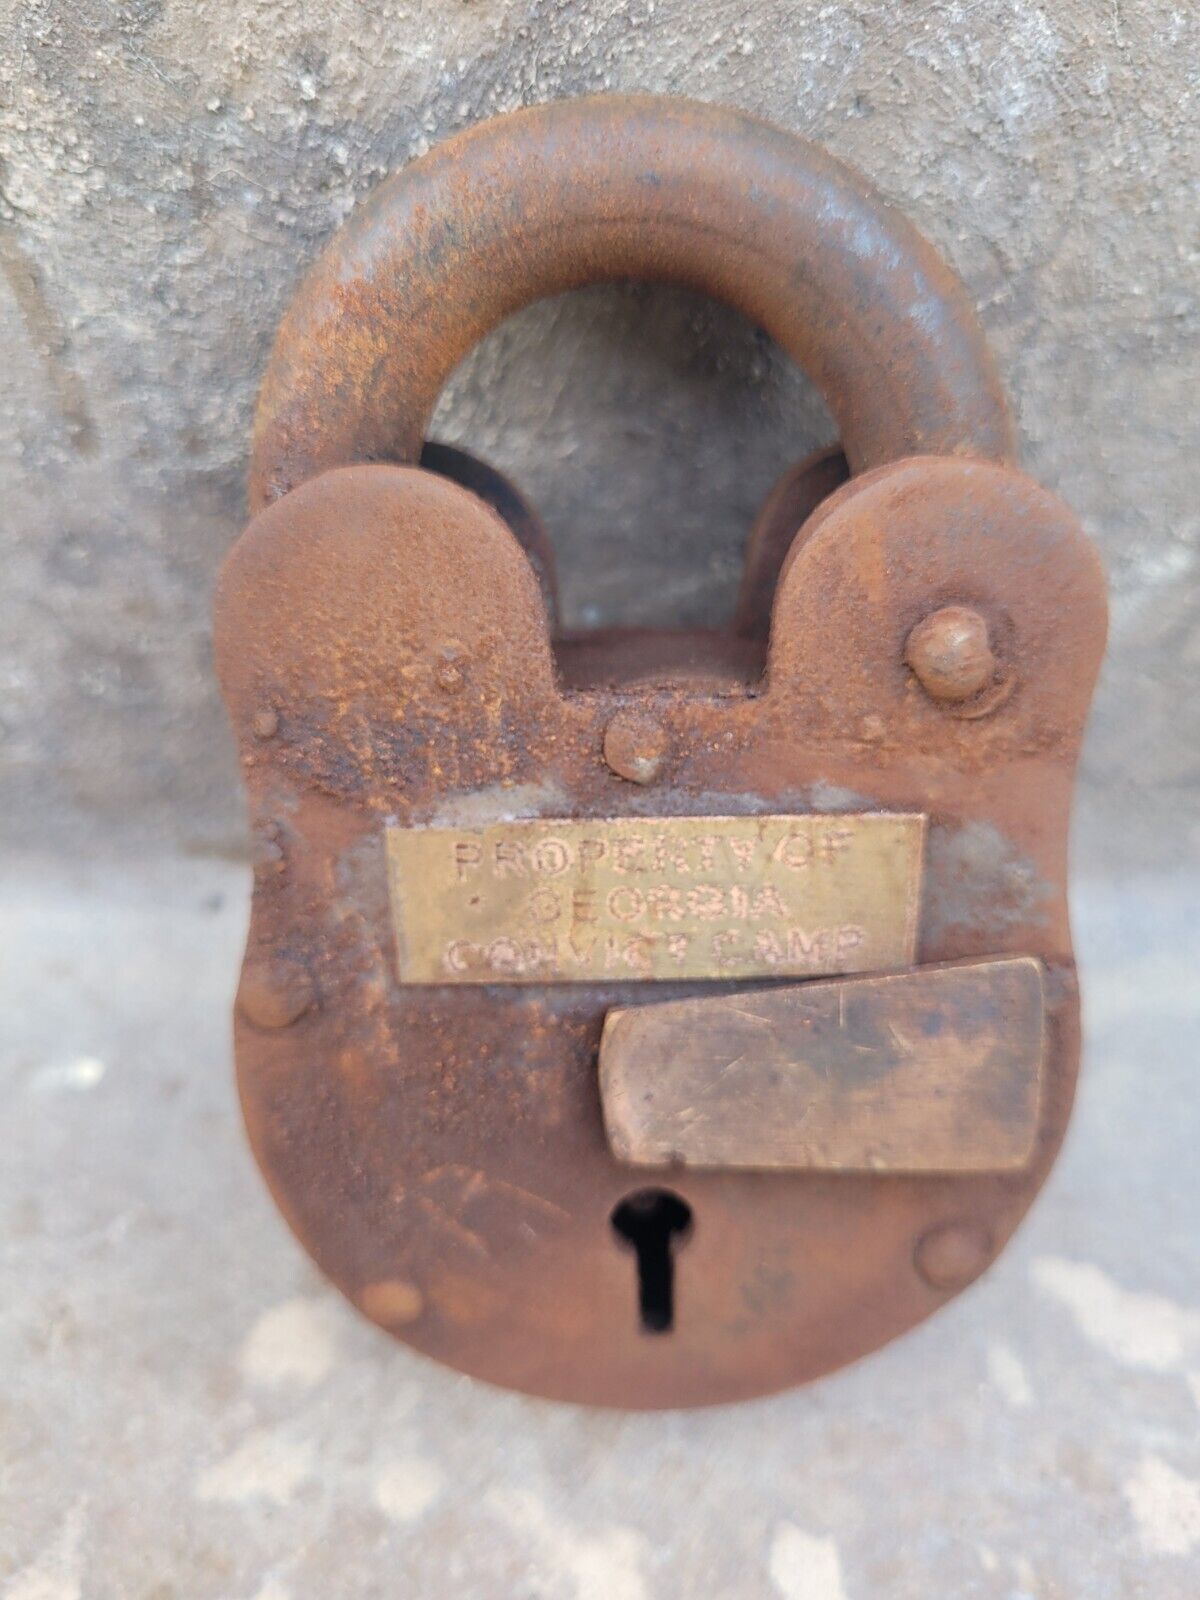 Georgia Convict Camp Prison Rusty Finish Cast Iron Large Lock Padlock 2 Keys